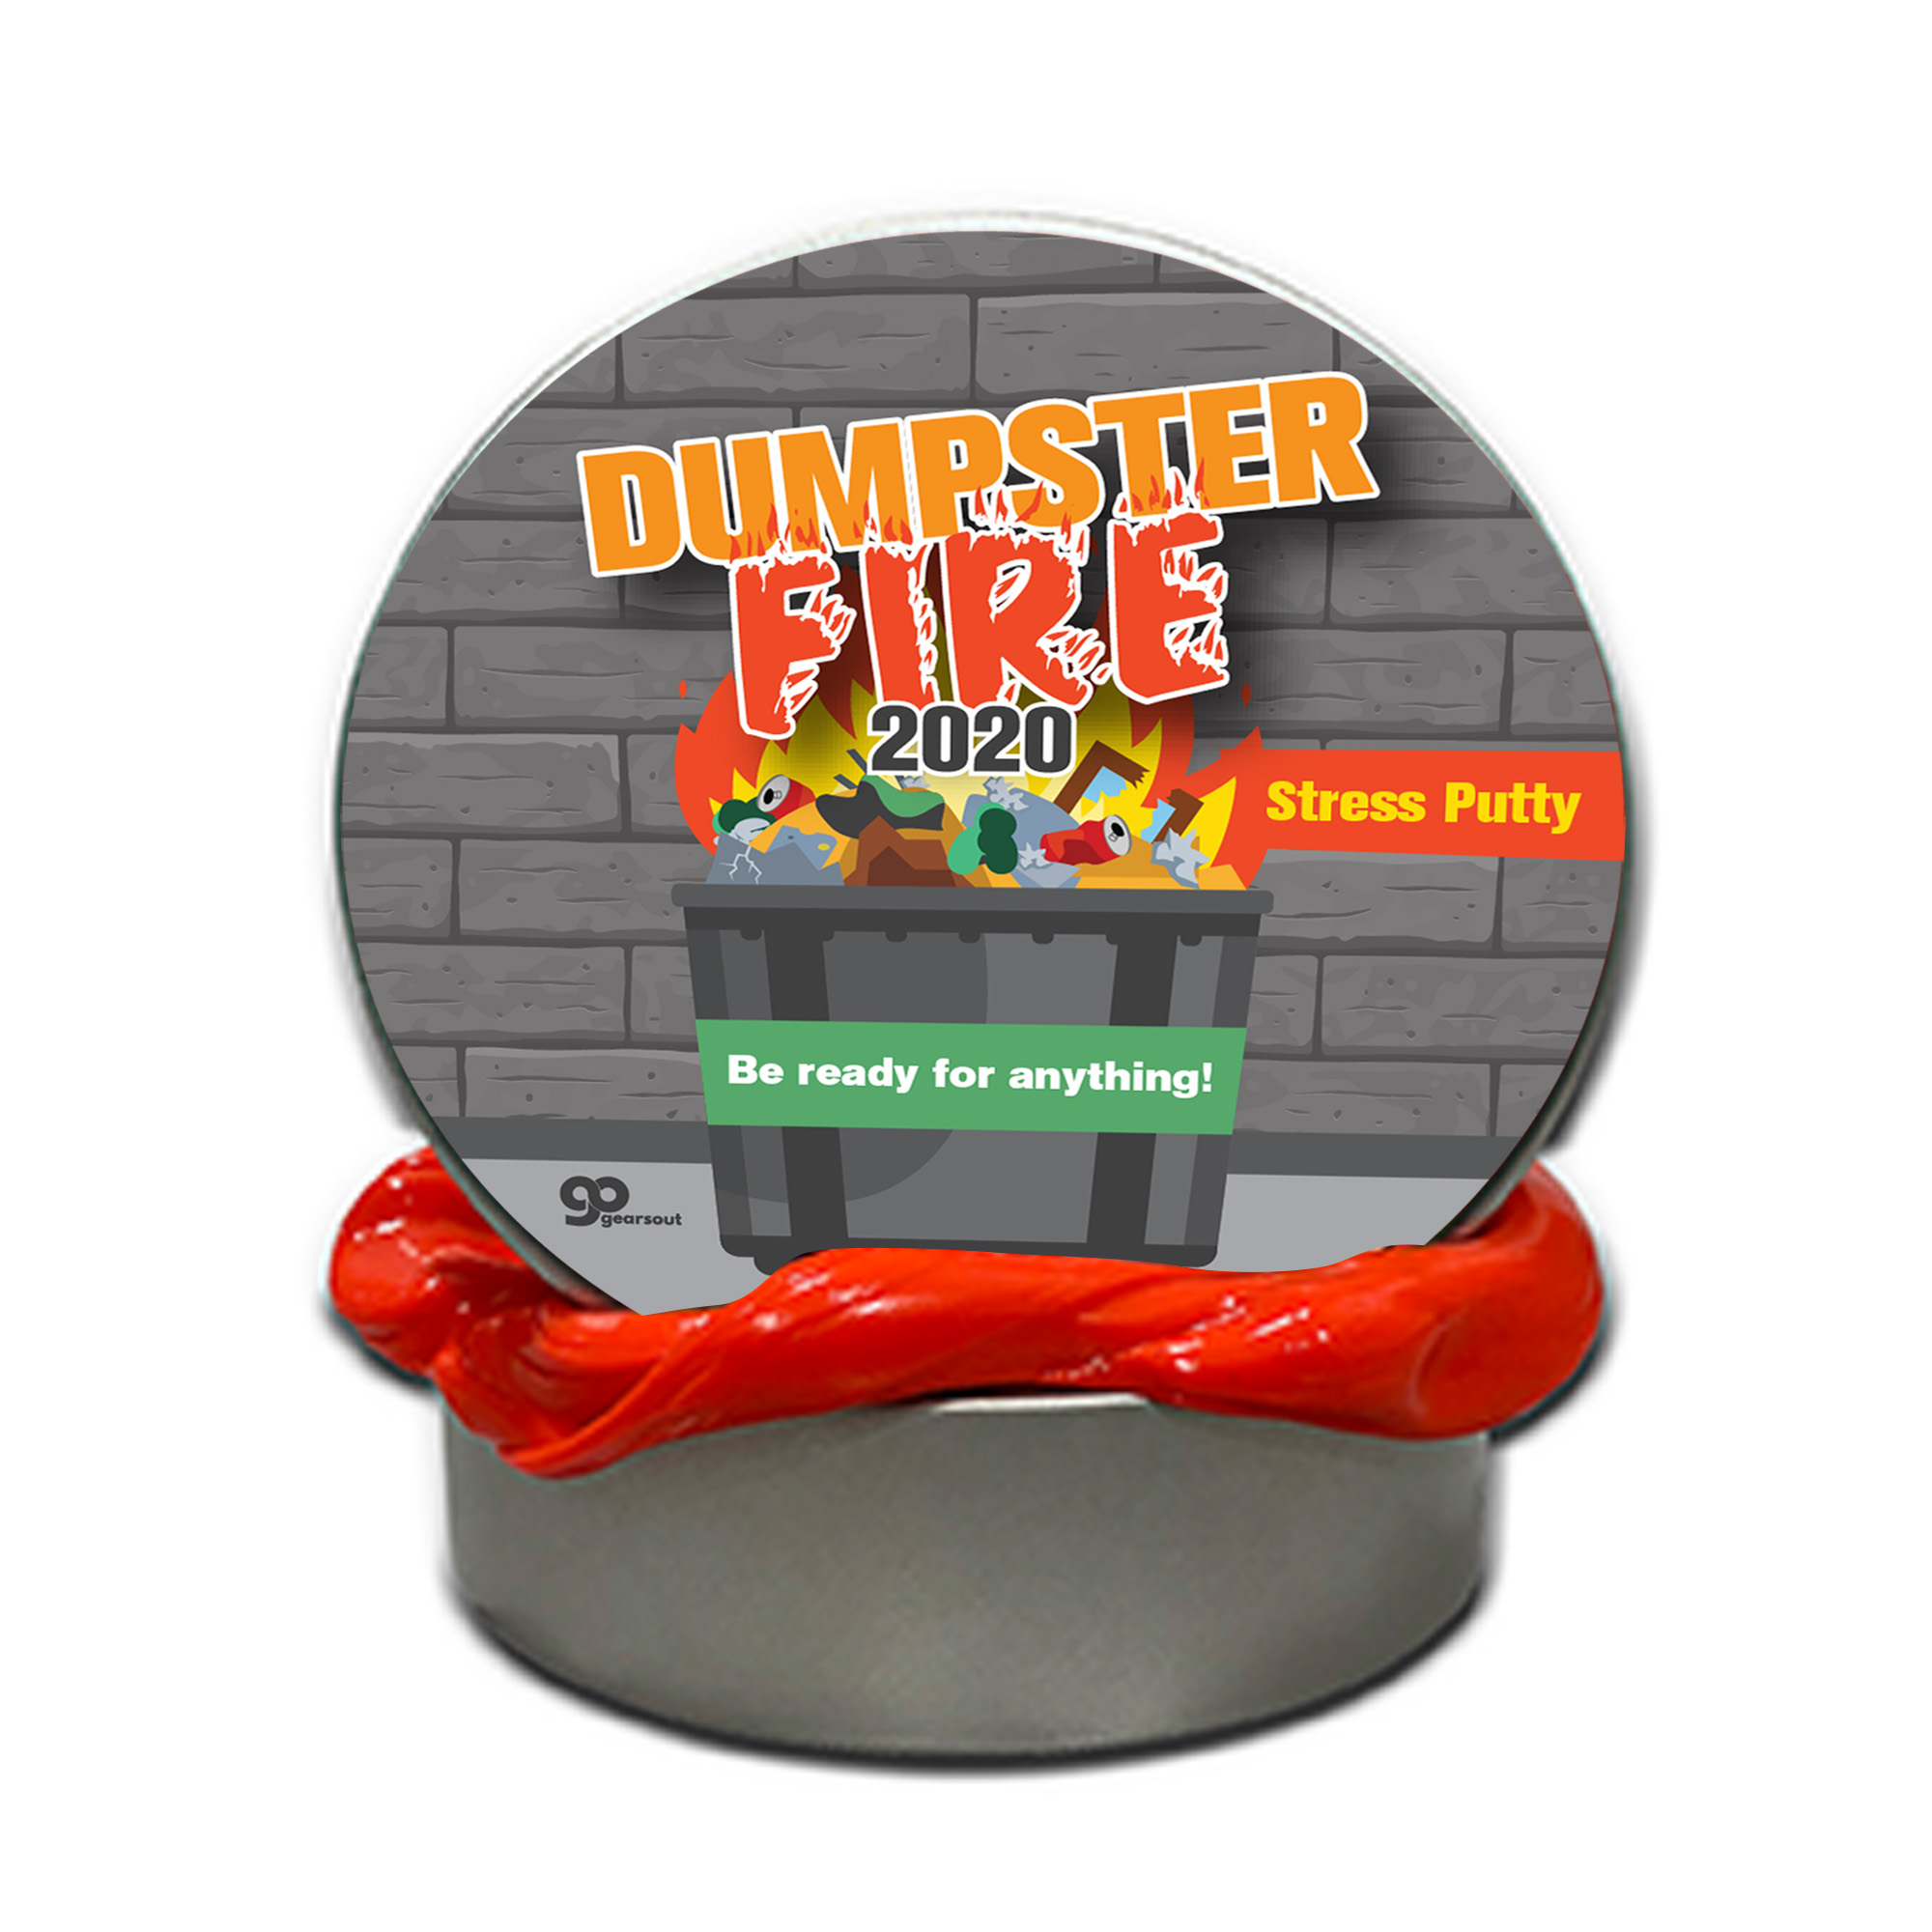 I'm Fine… Everythin's Fine Dumpster Fire Plush — Scrumptious